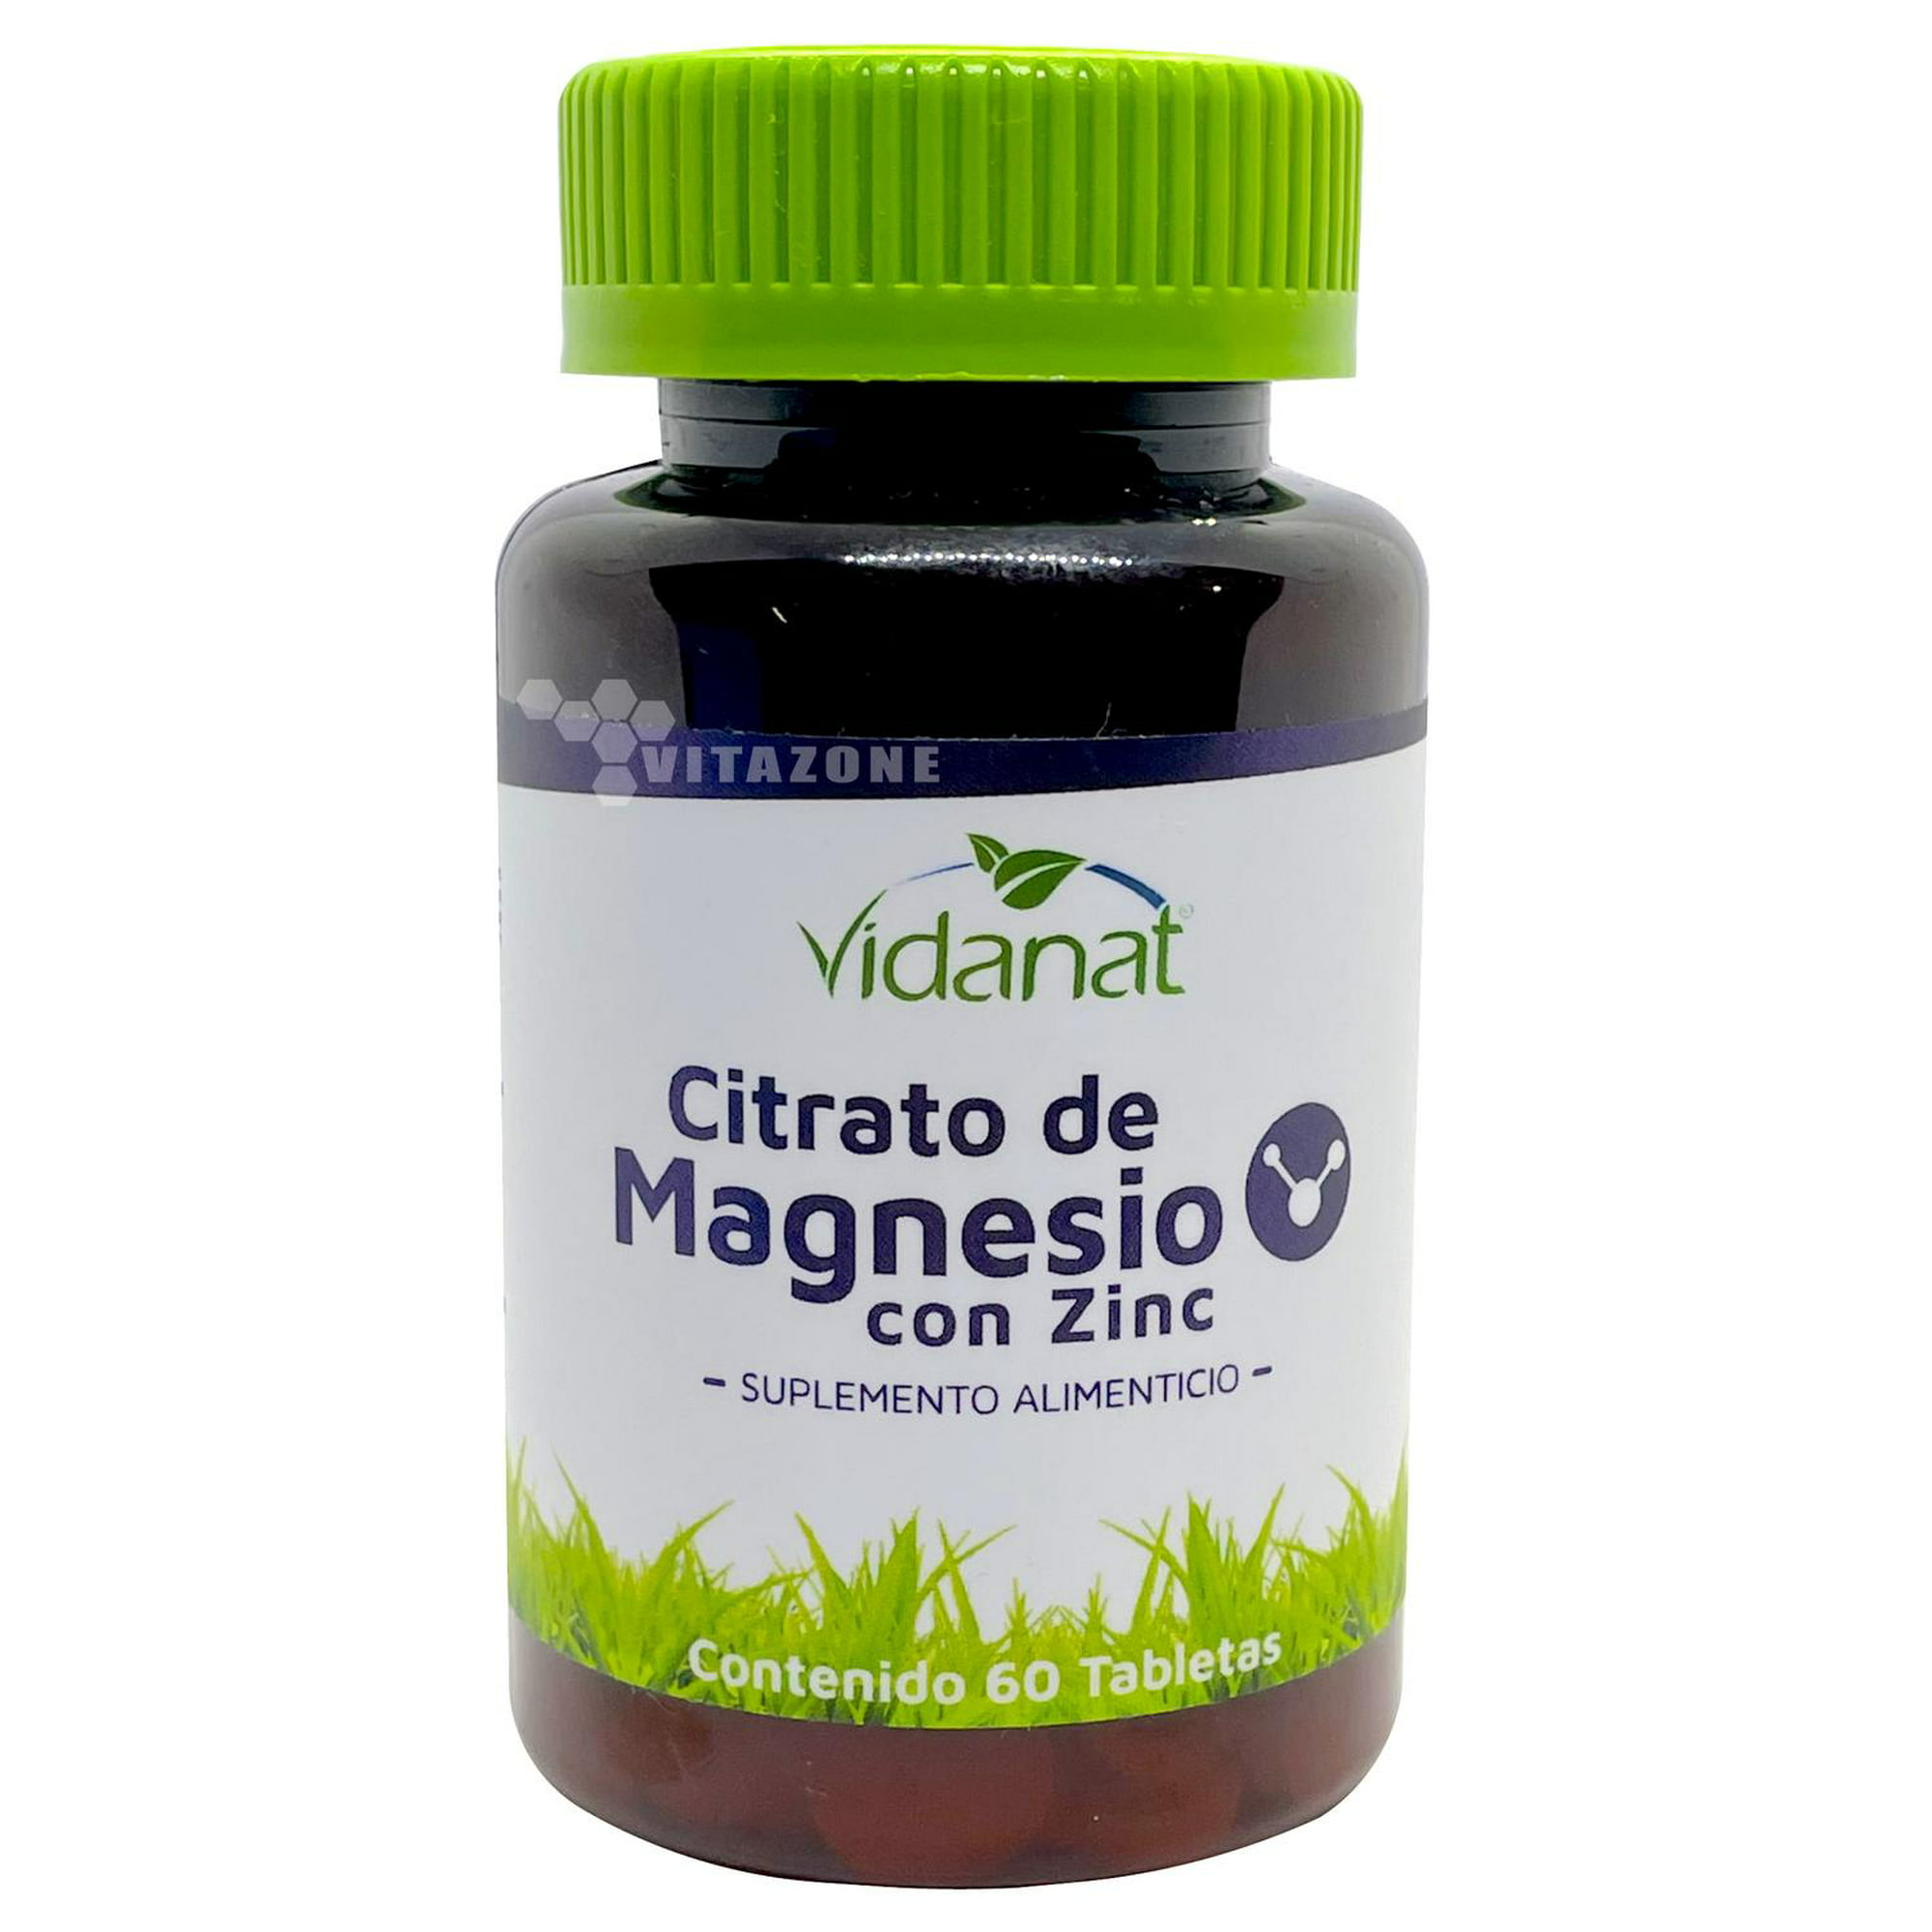 Magnesio Líquido + Magnesio 250g